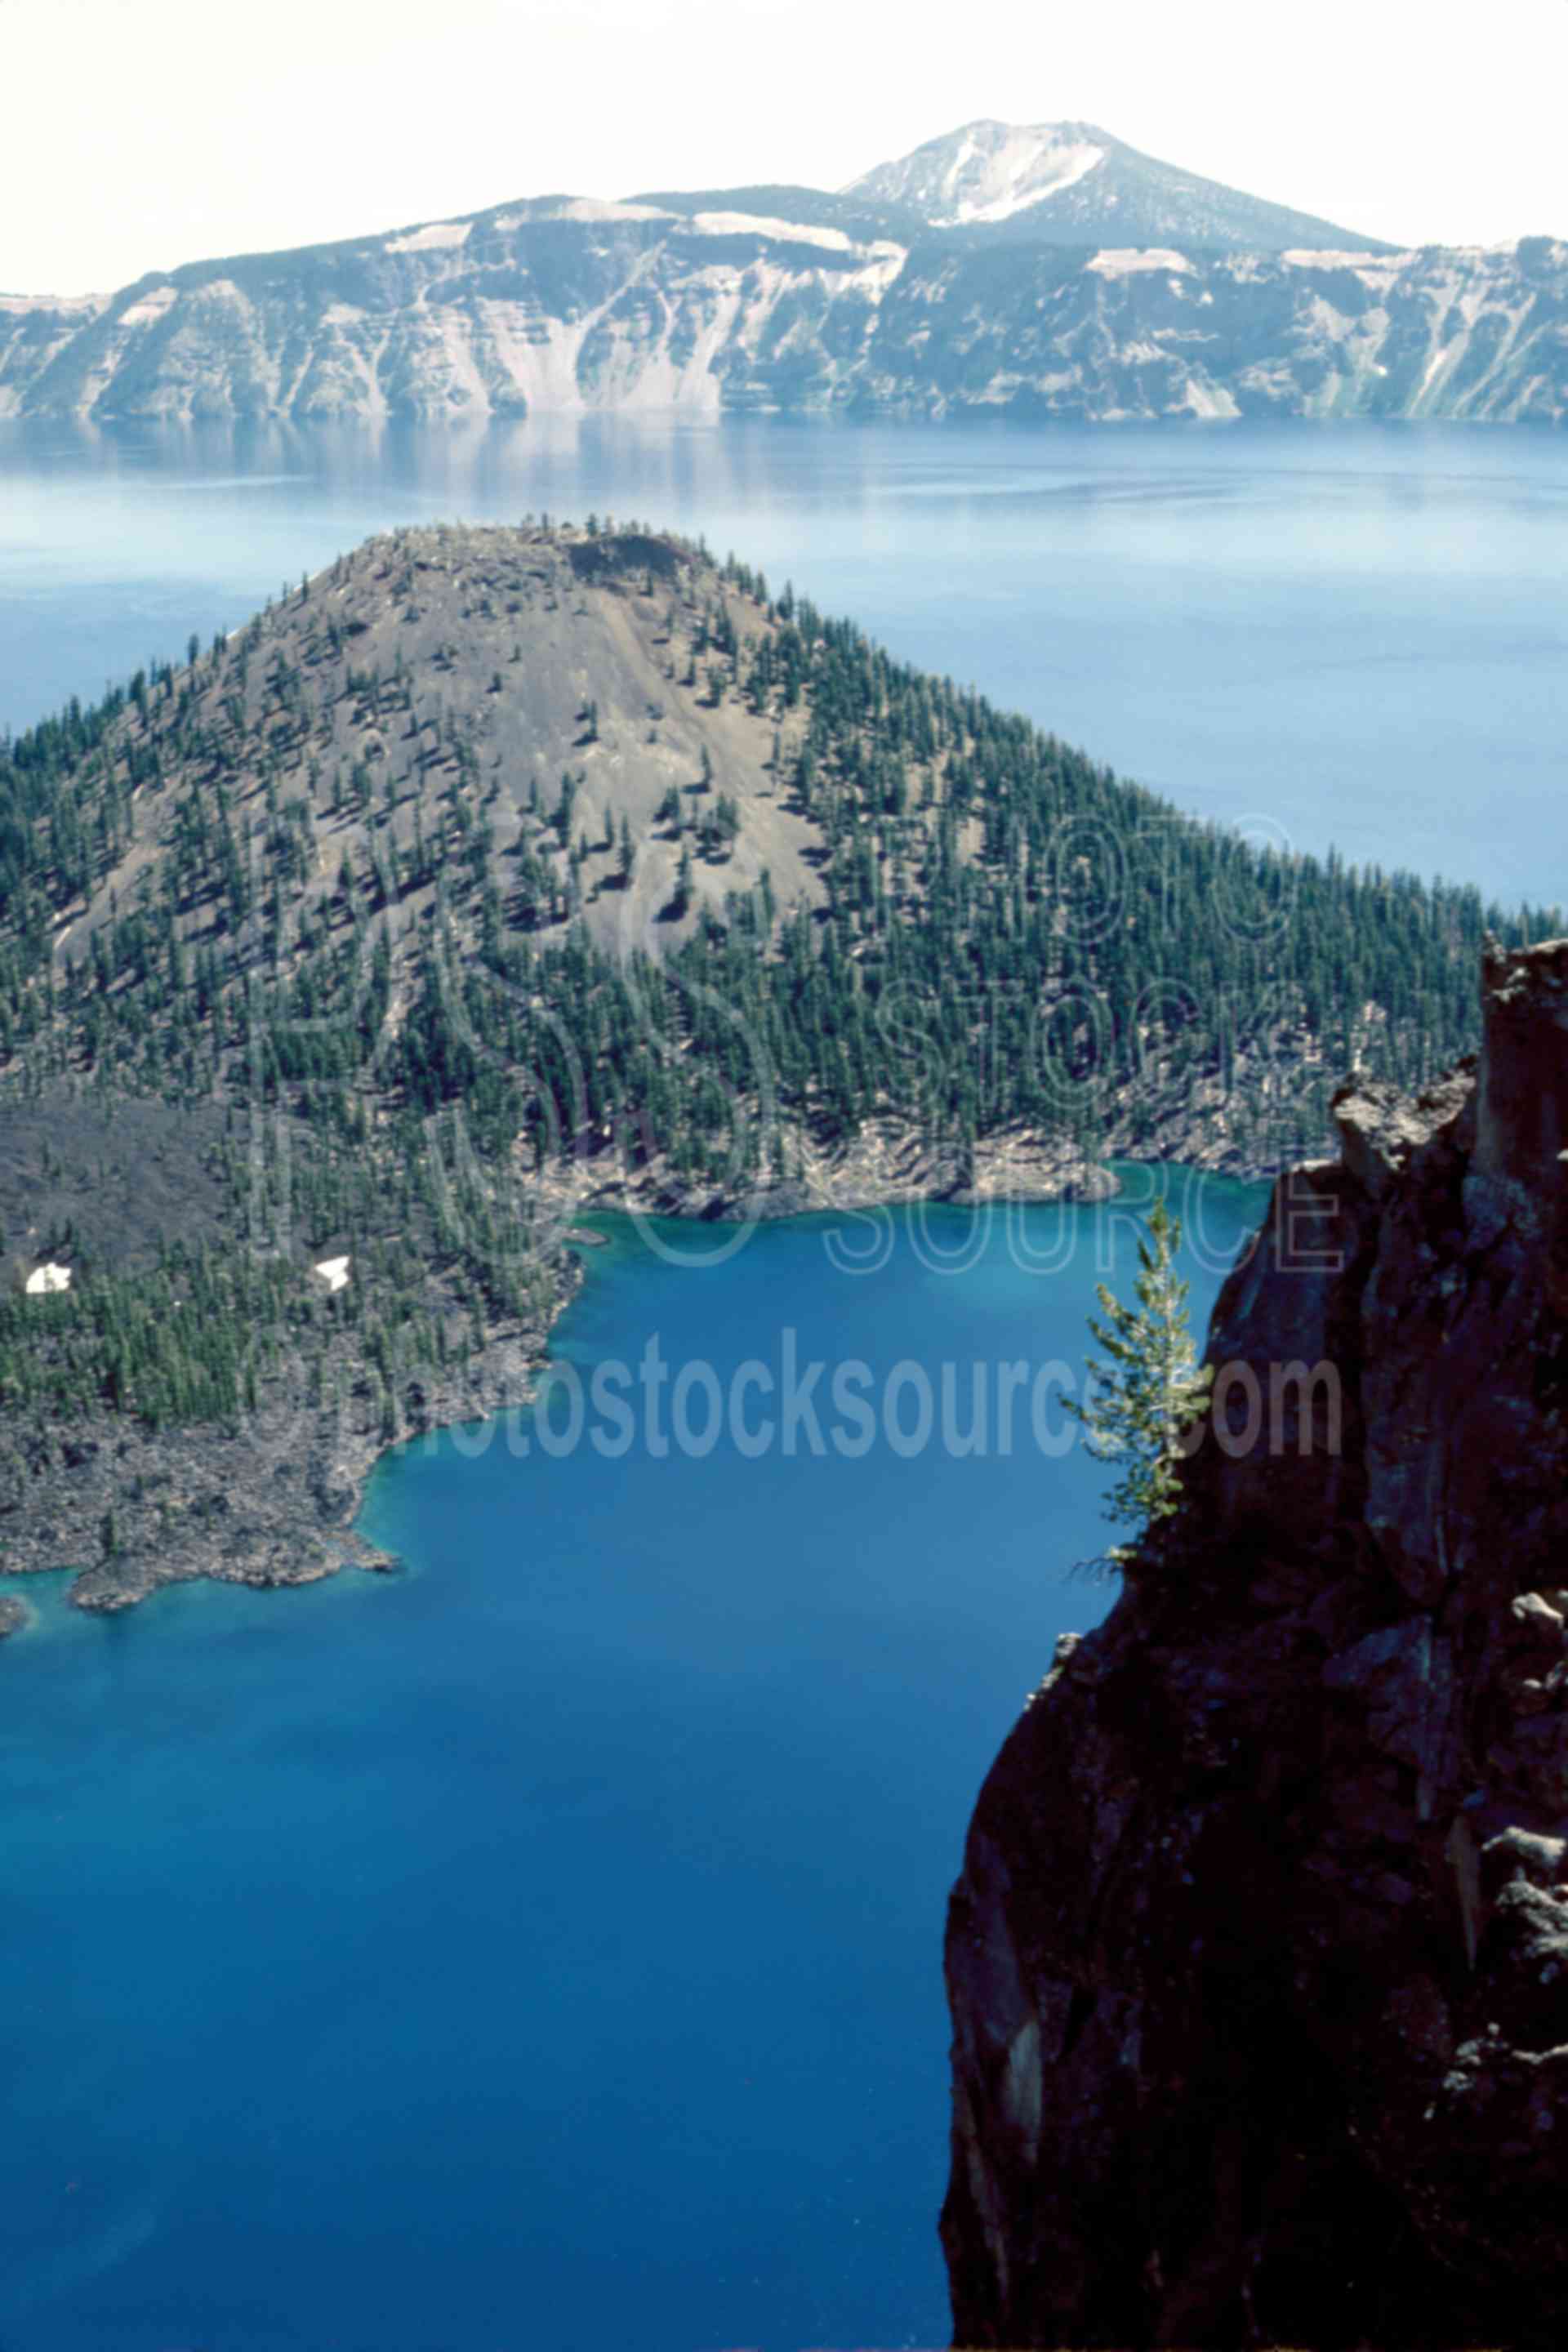 Wizard Island, Mount Scott,mount scott,wizard island,caldera,usas,national park,nature